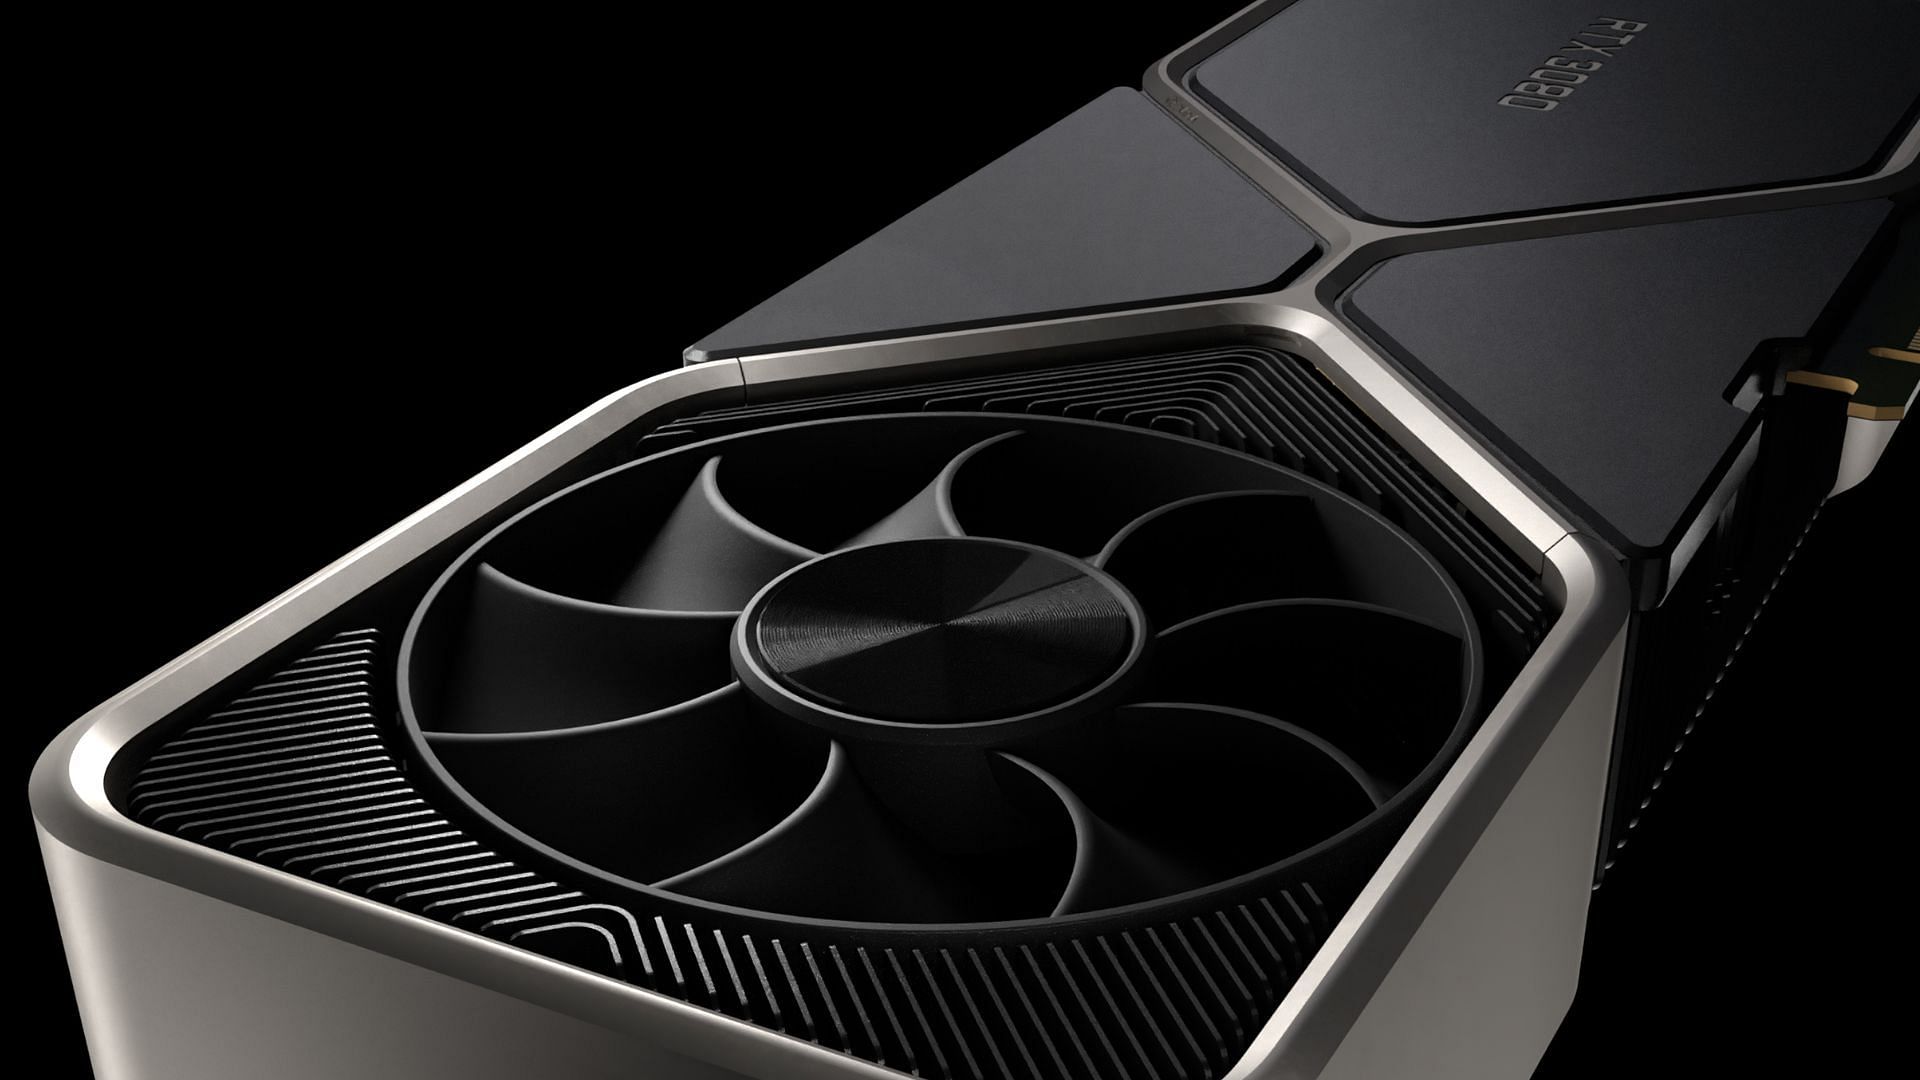 NVIDIA GeForce RTX 50 Flagship Gaming GPU Rumored To Feature GDDR7 Memory &  384-bit Bus